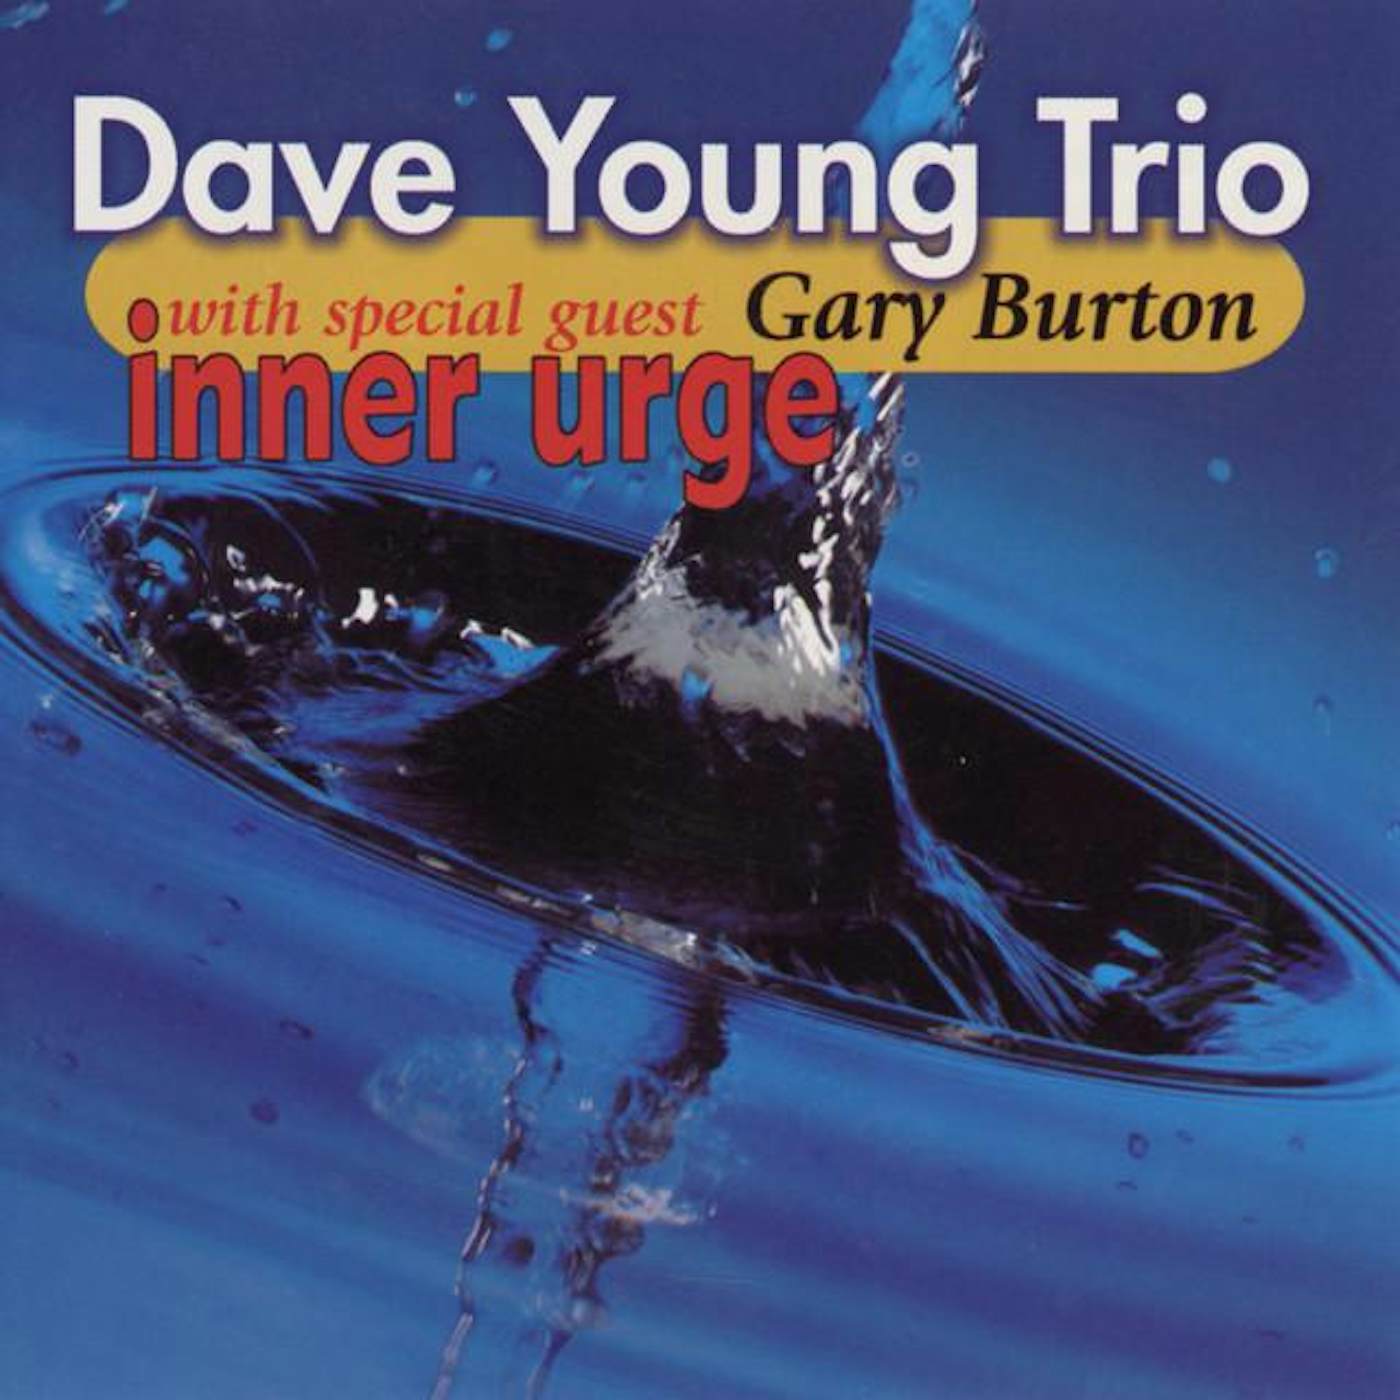 Dave Young Trio